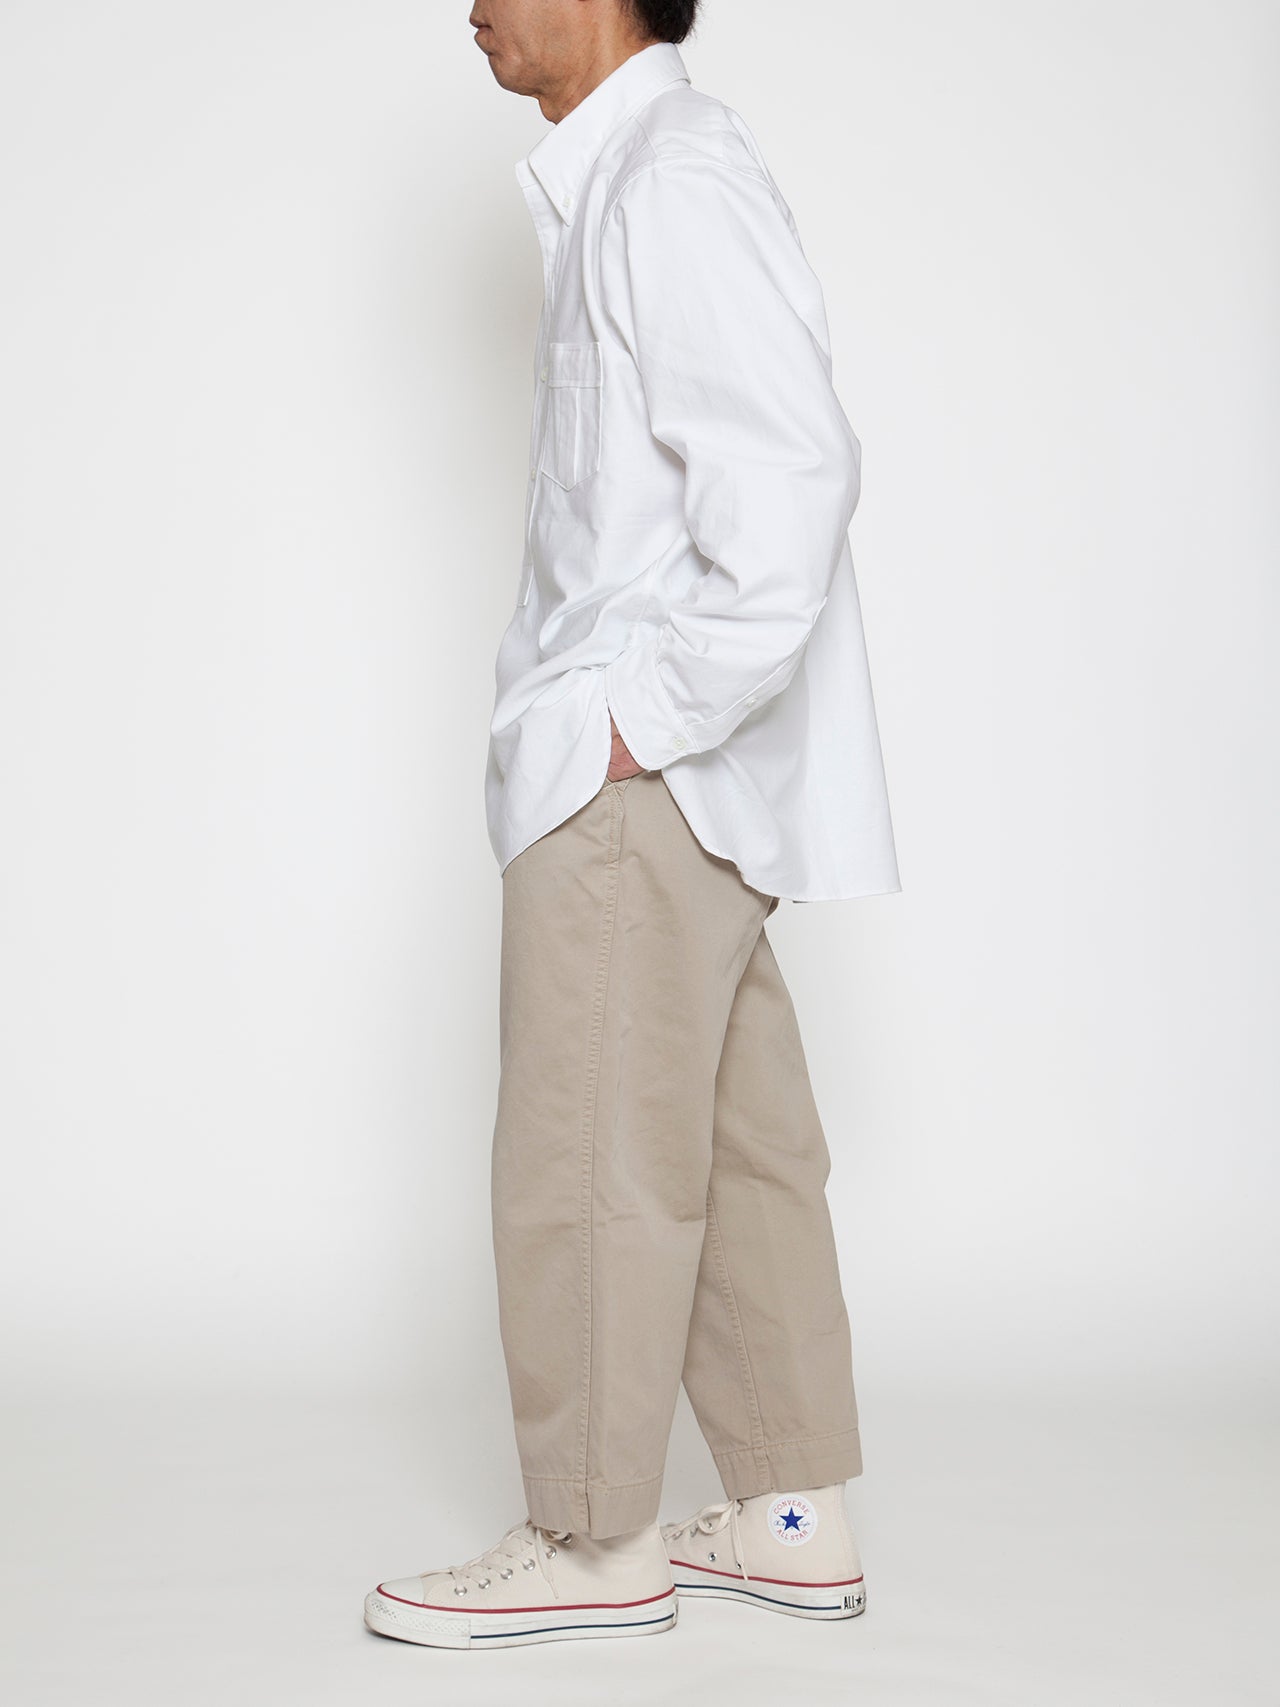 CS005 - CORONA・White Collar Work Shirt / American Sea Island Cotton - White